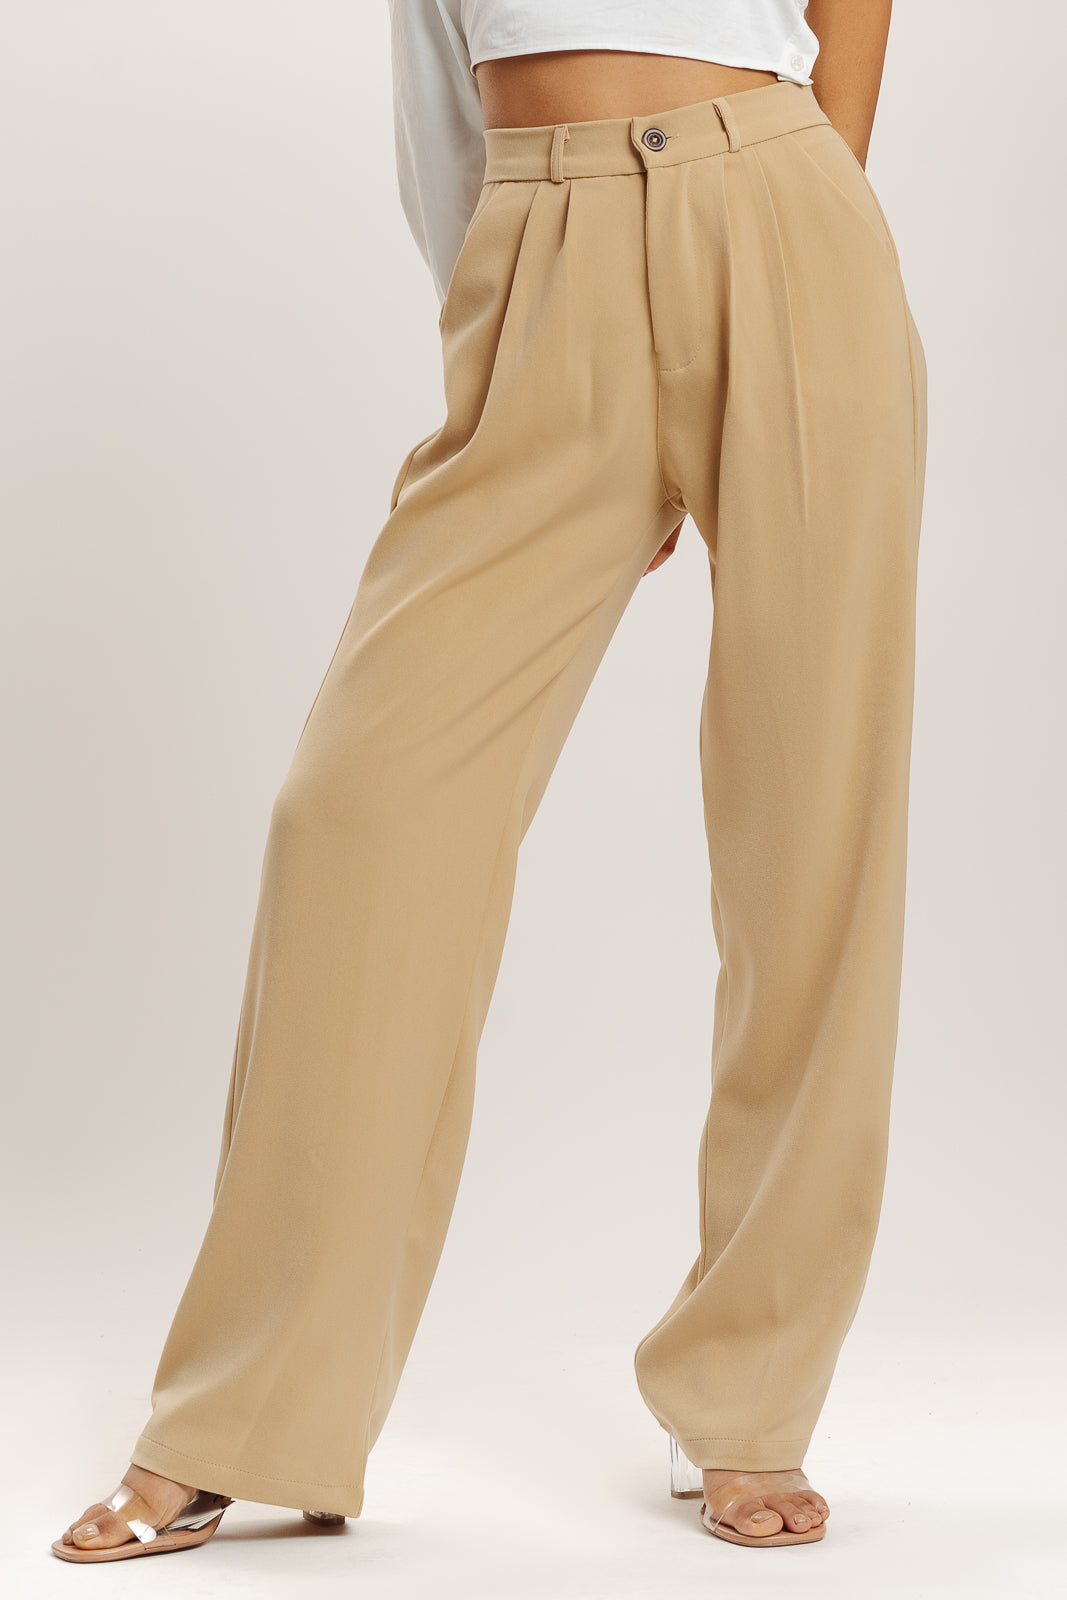 Anti-Wrinkle Flat front korean pants by High-Buy-Cream